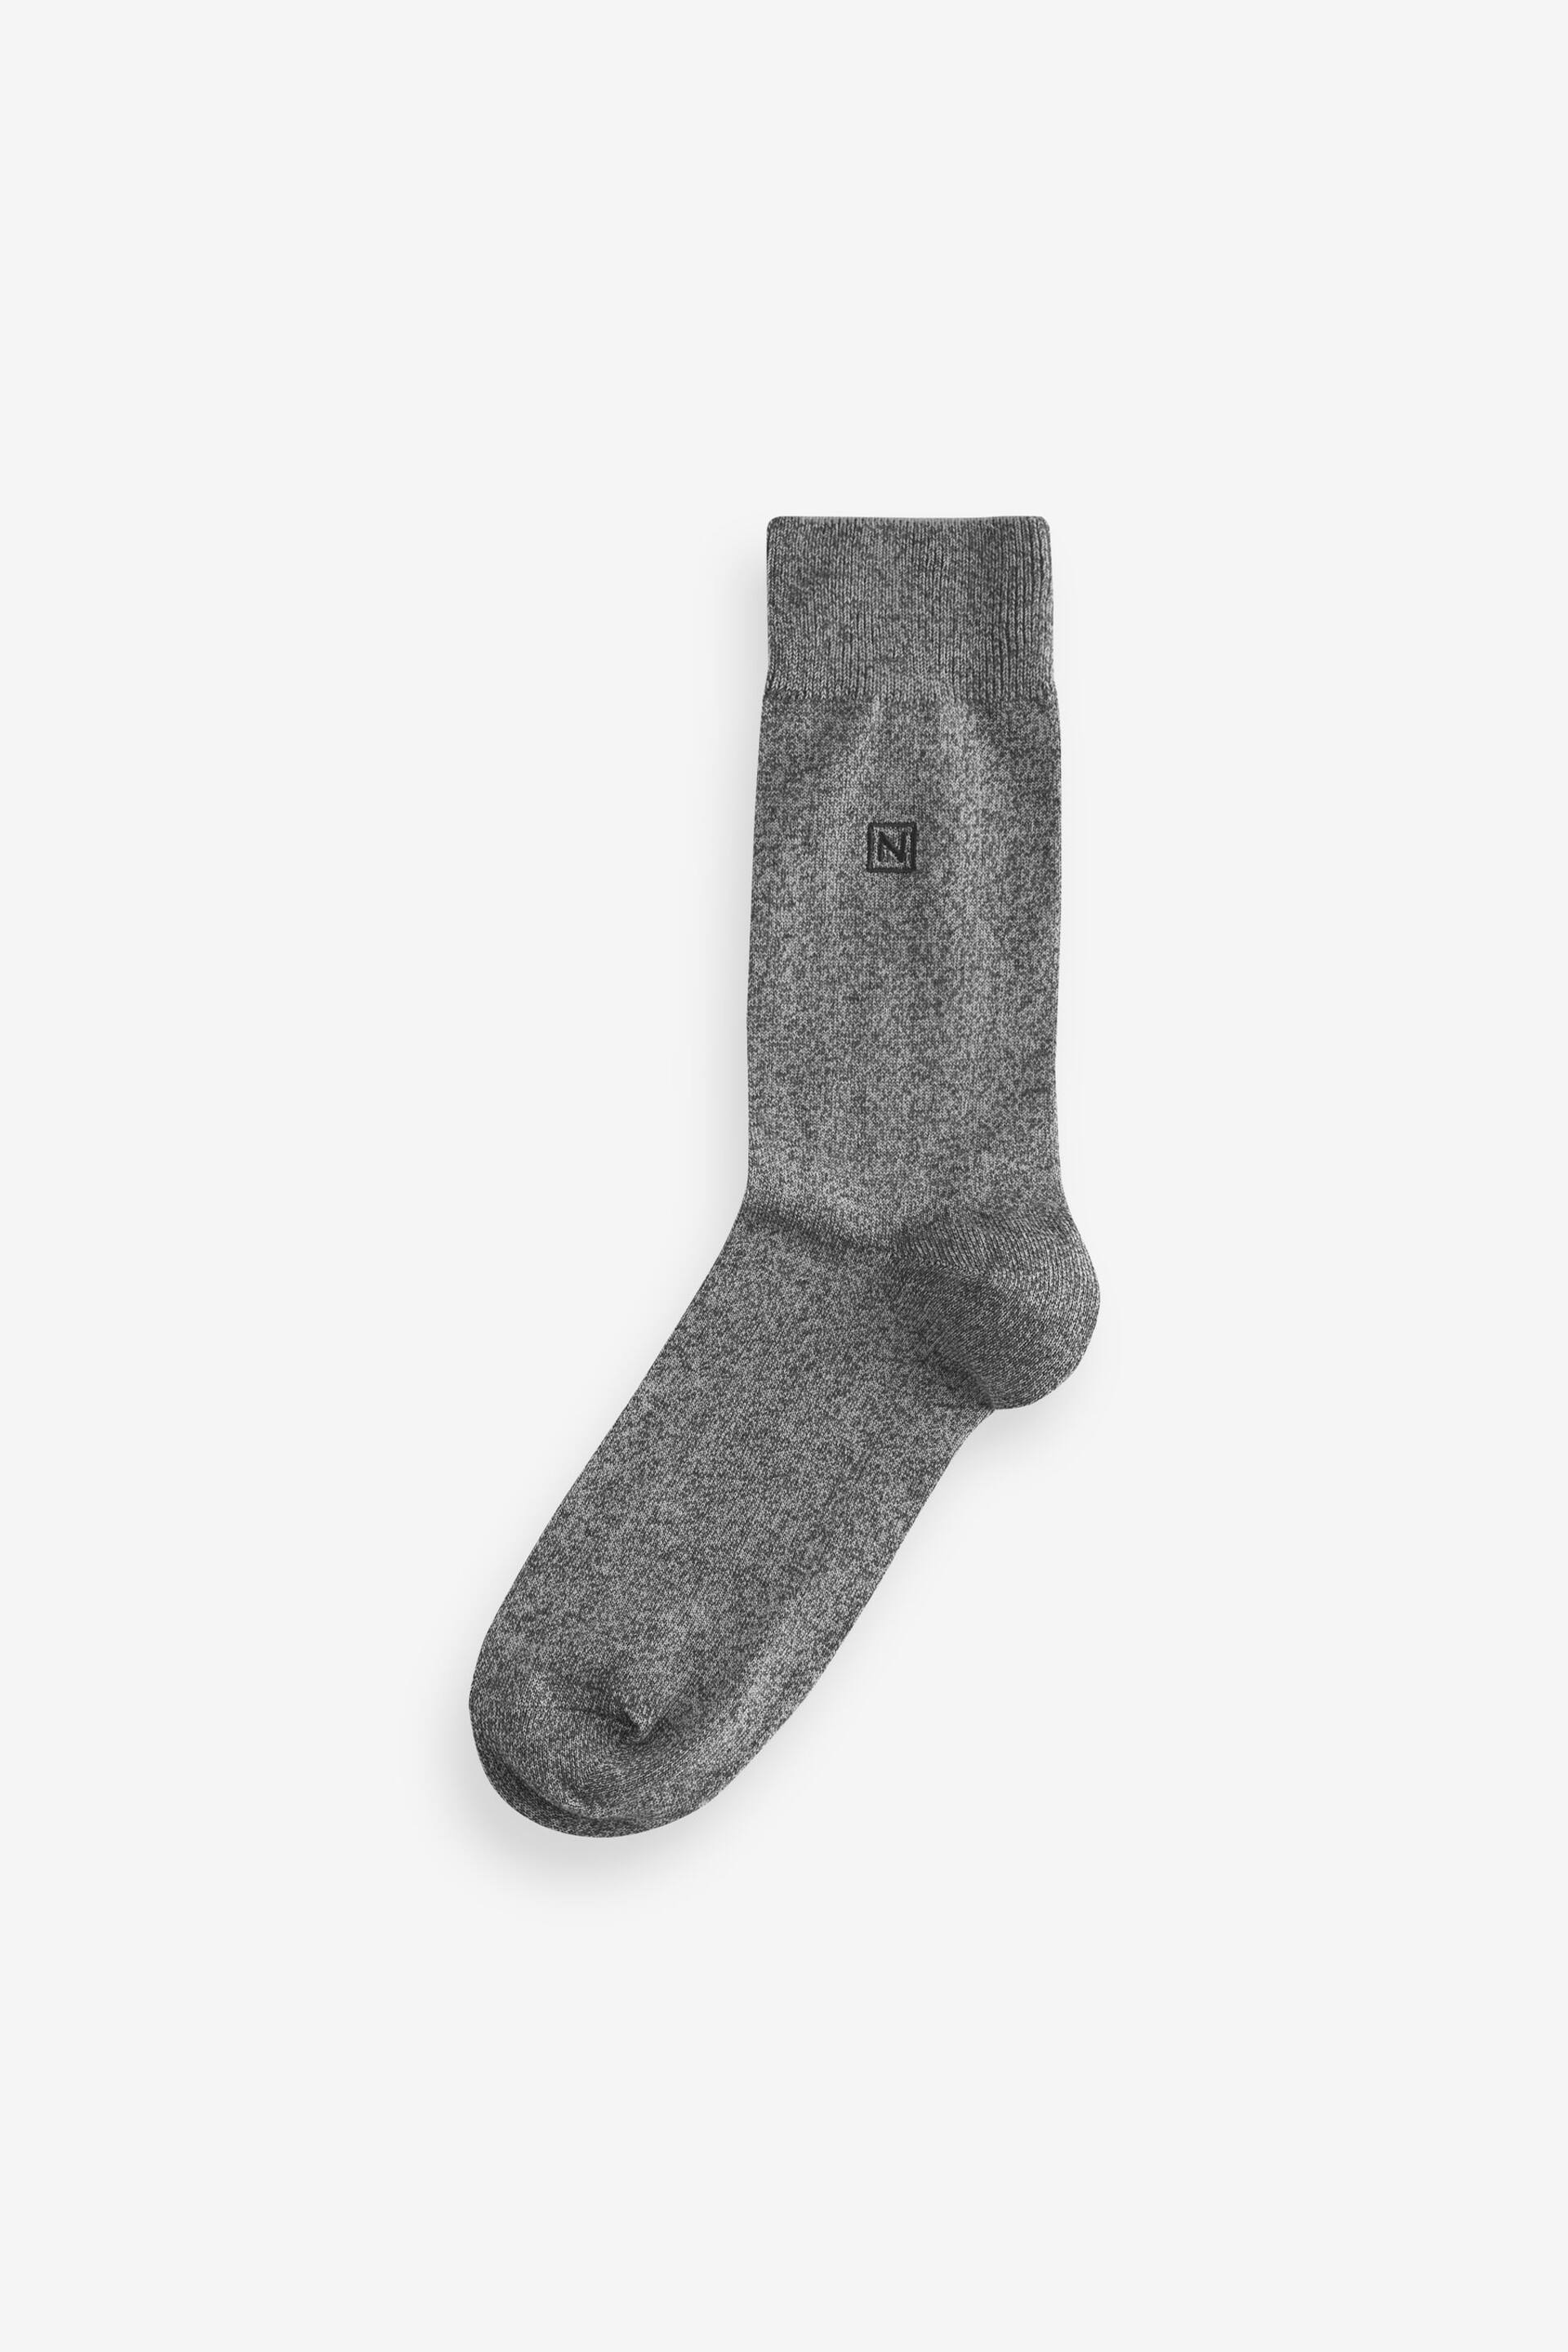 Black/Grey 10 Pack Embroidered Lasting Fresh Socks - Image 5 of 7